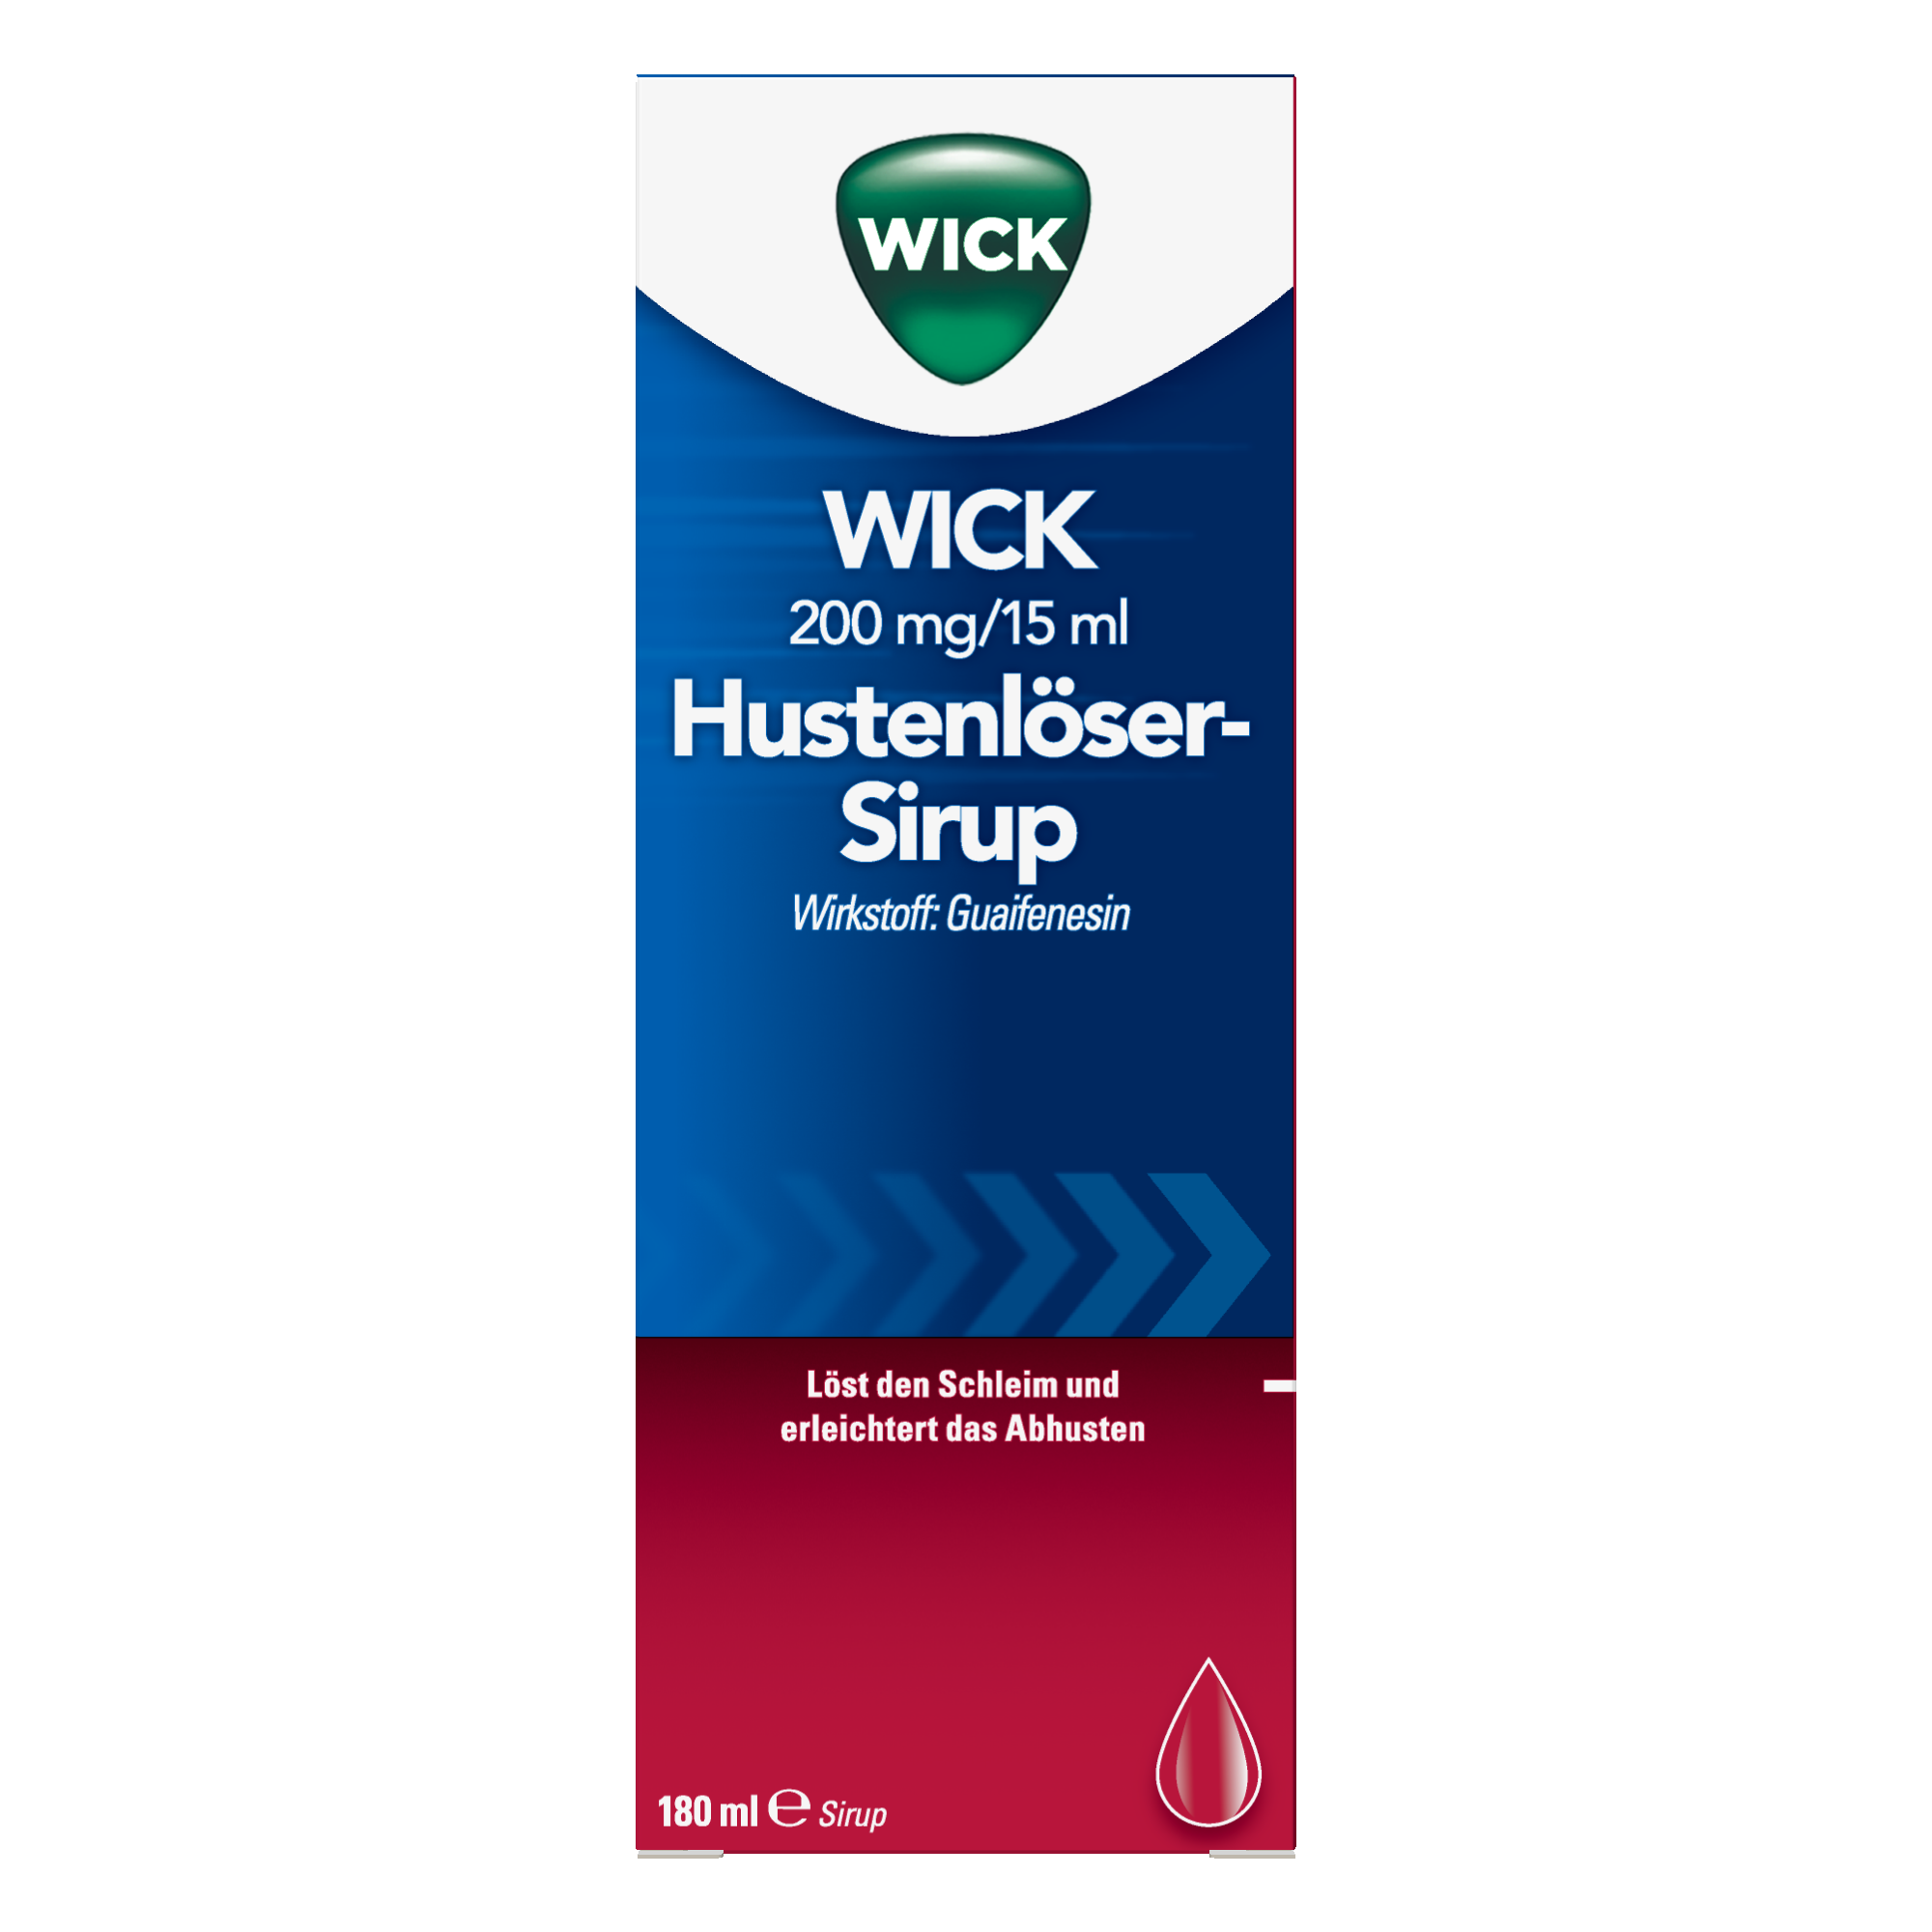 WICK Hustenlöser-Sirup 200mg/15ml